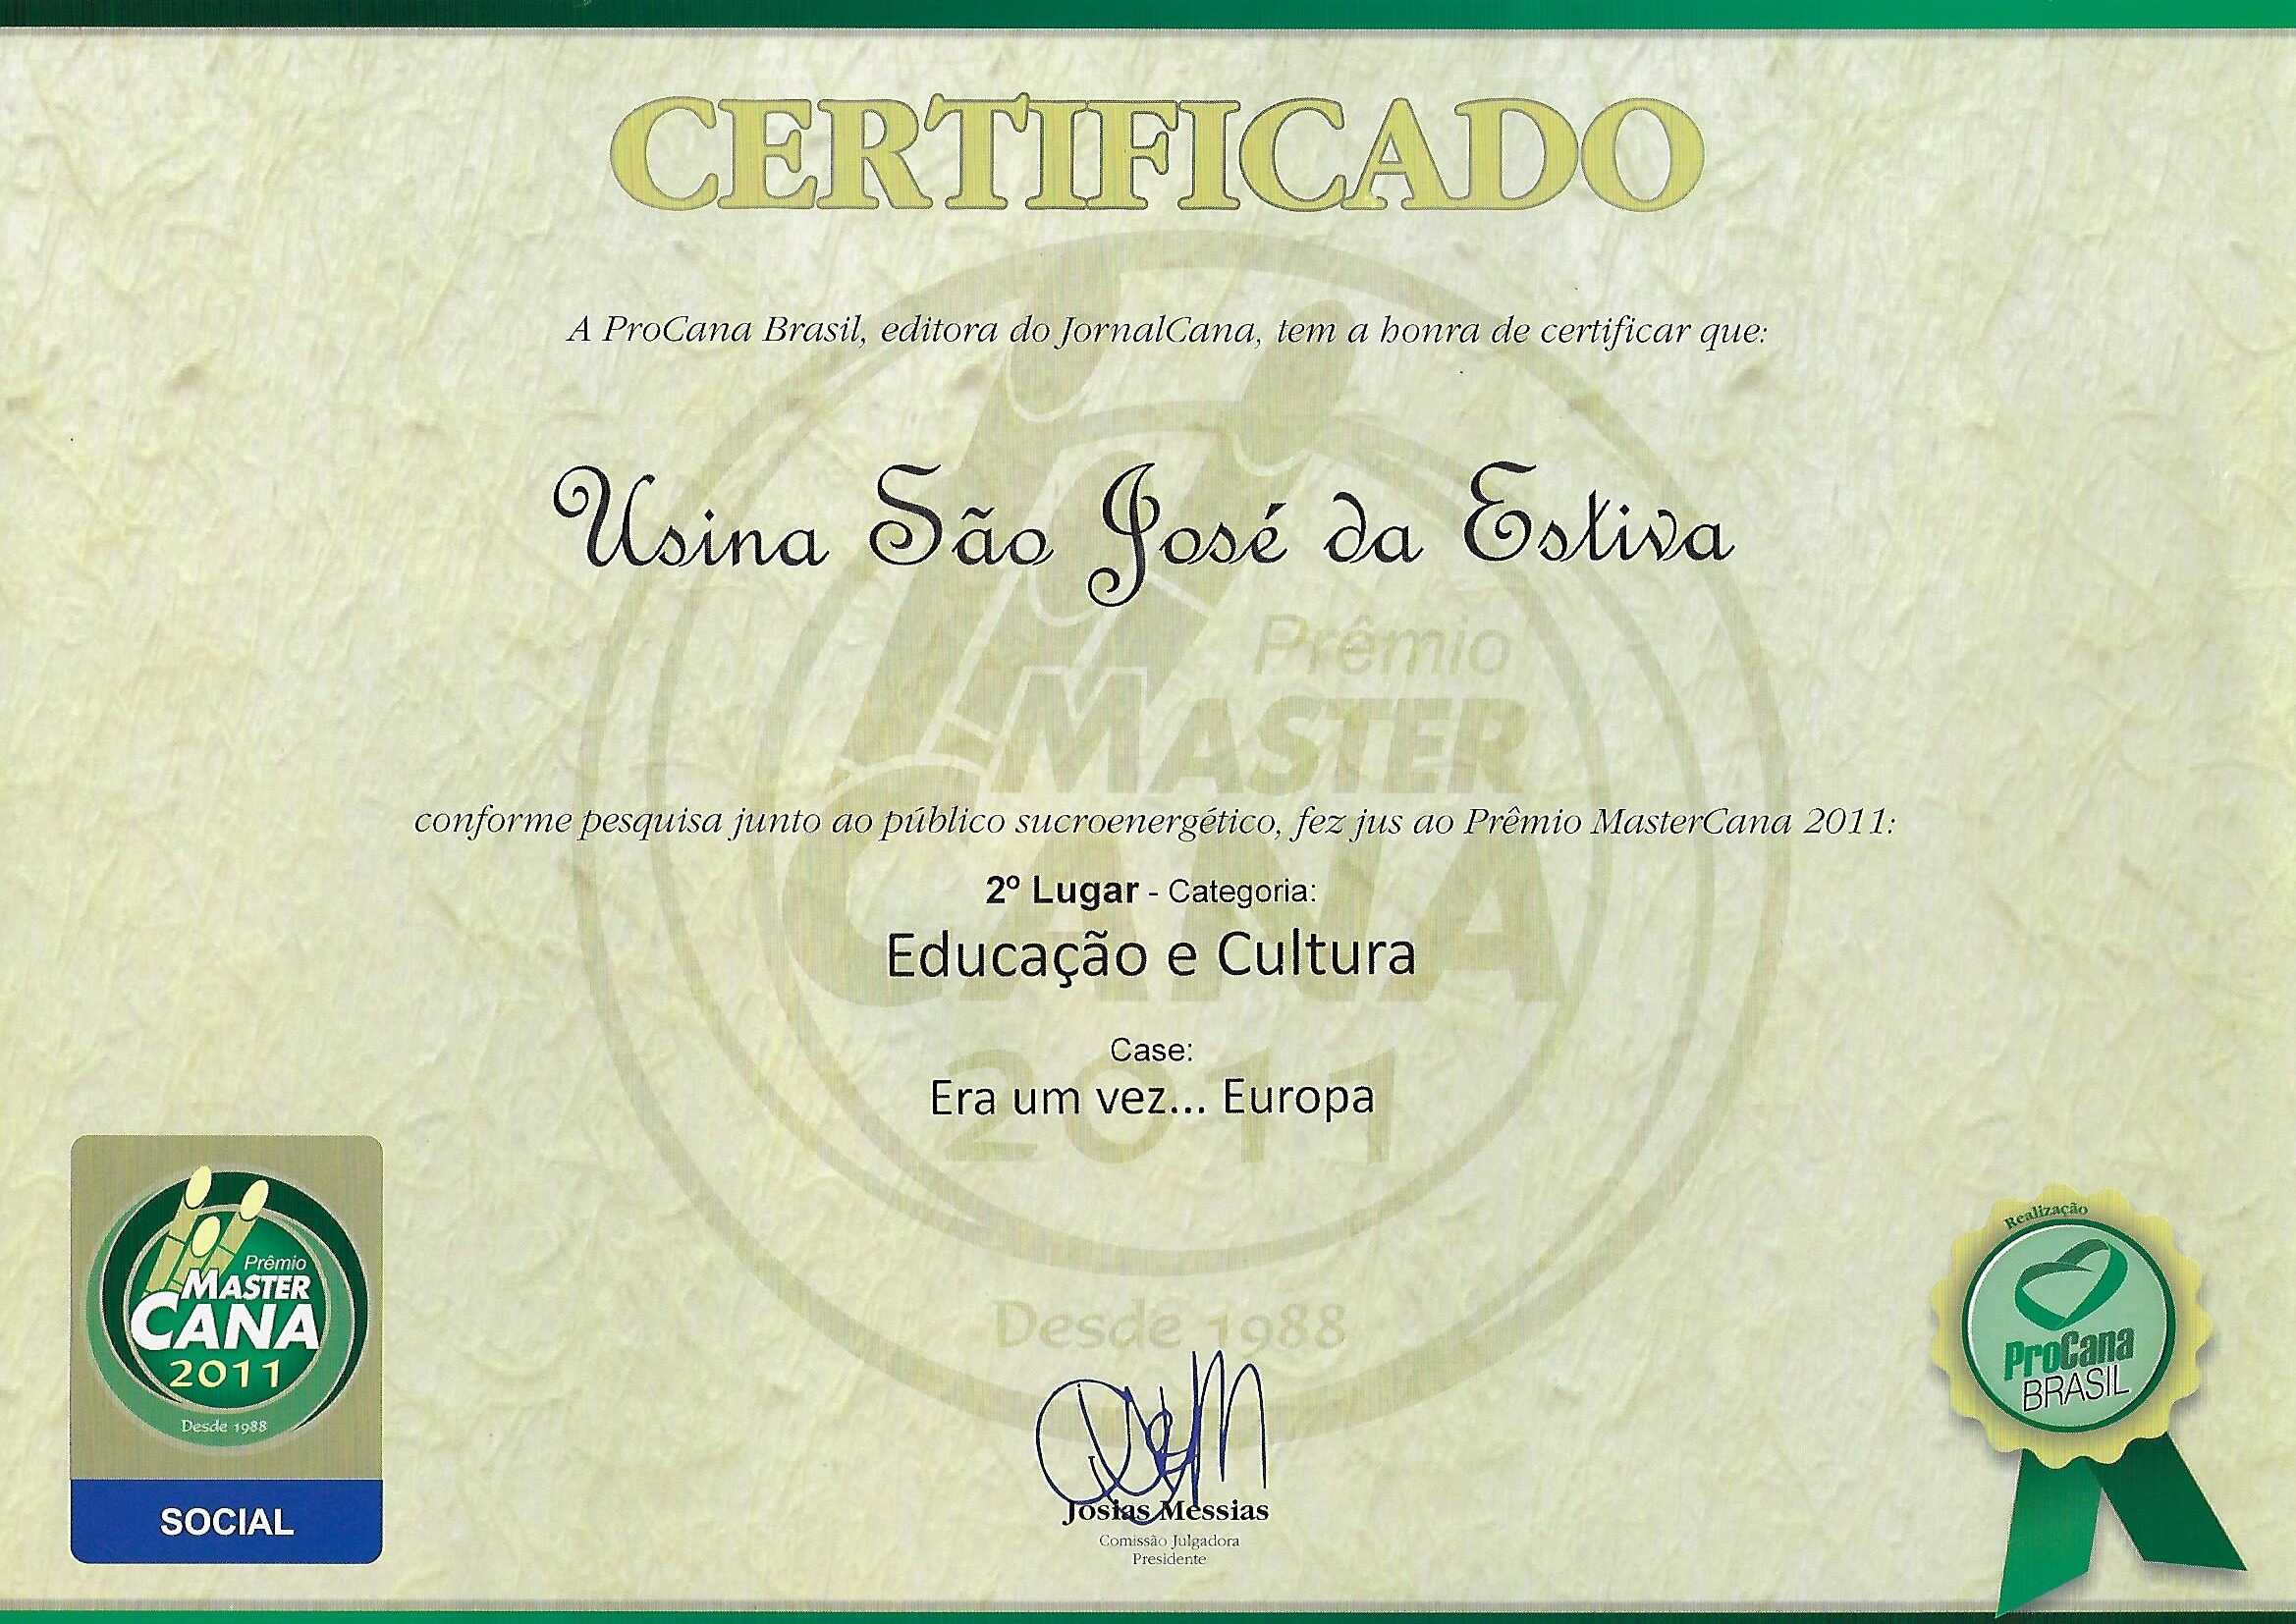 CertificadoMastercana2011-EDUeCultura.jpg (2.03 MB)